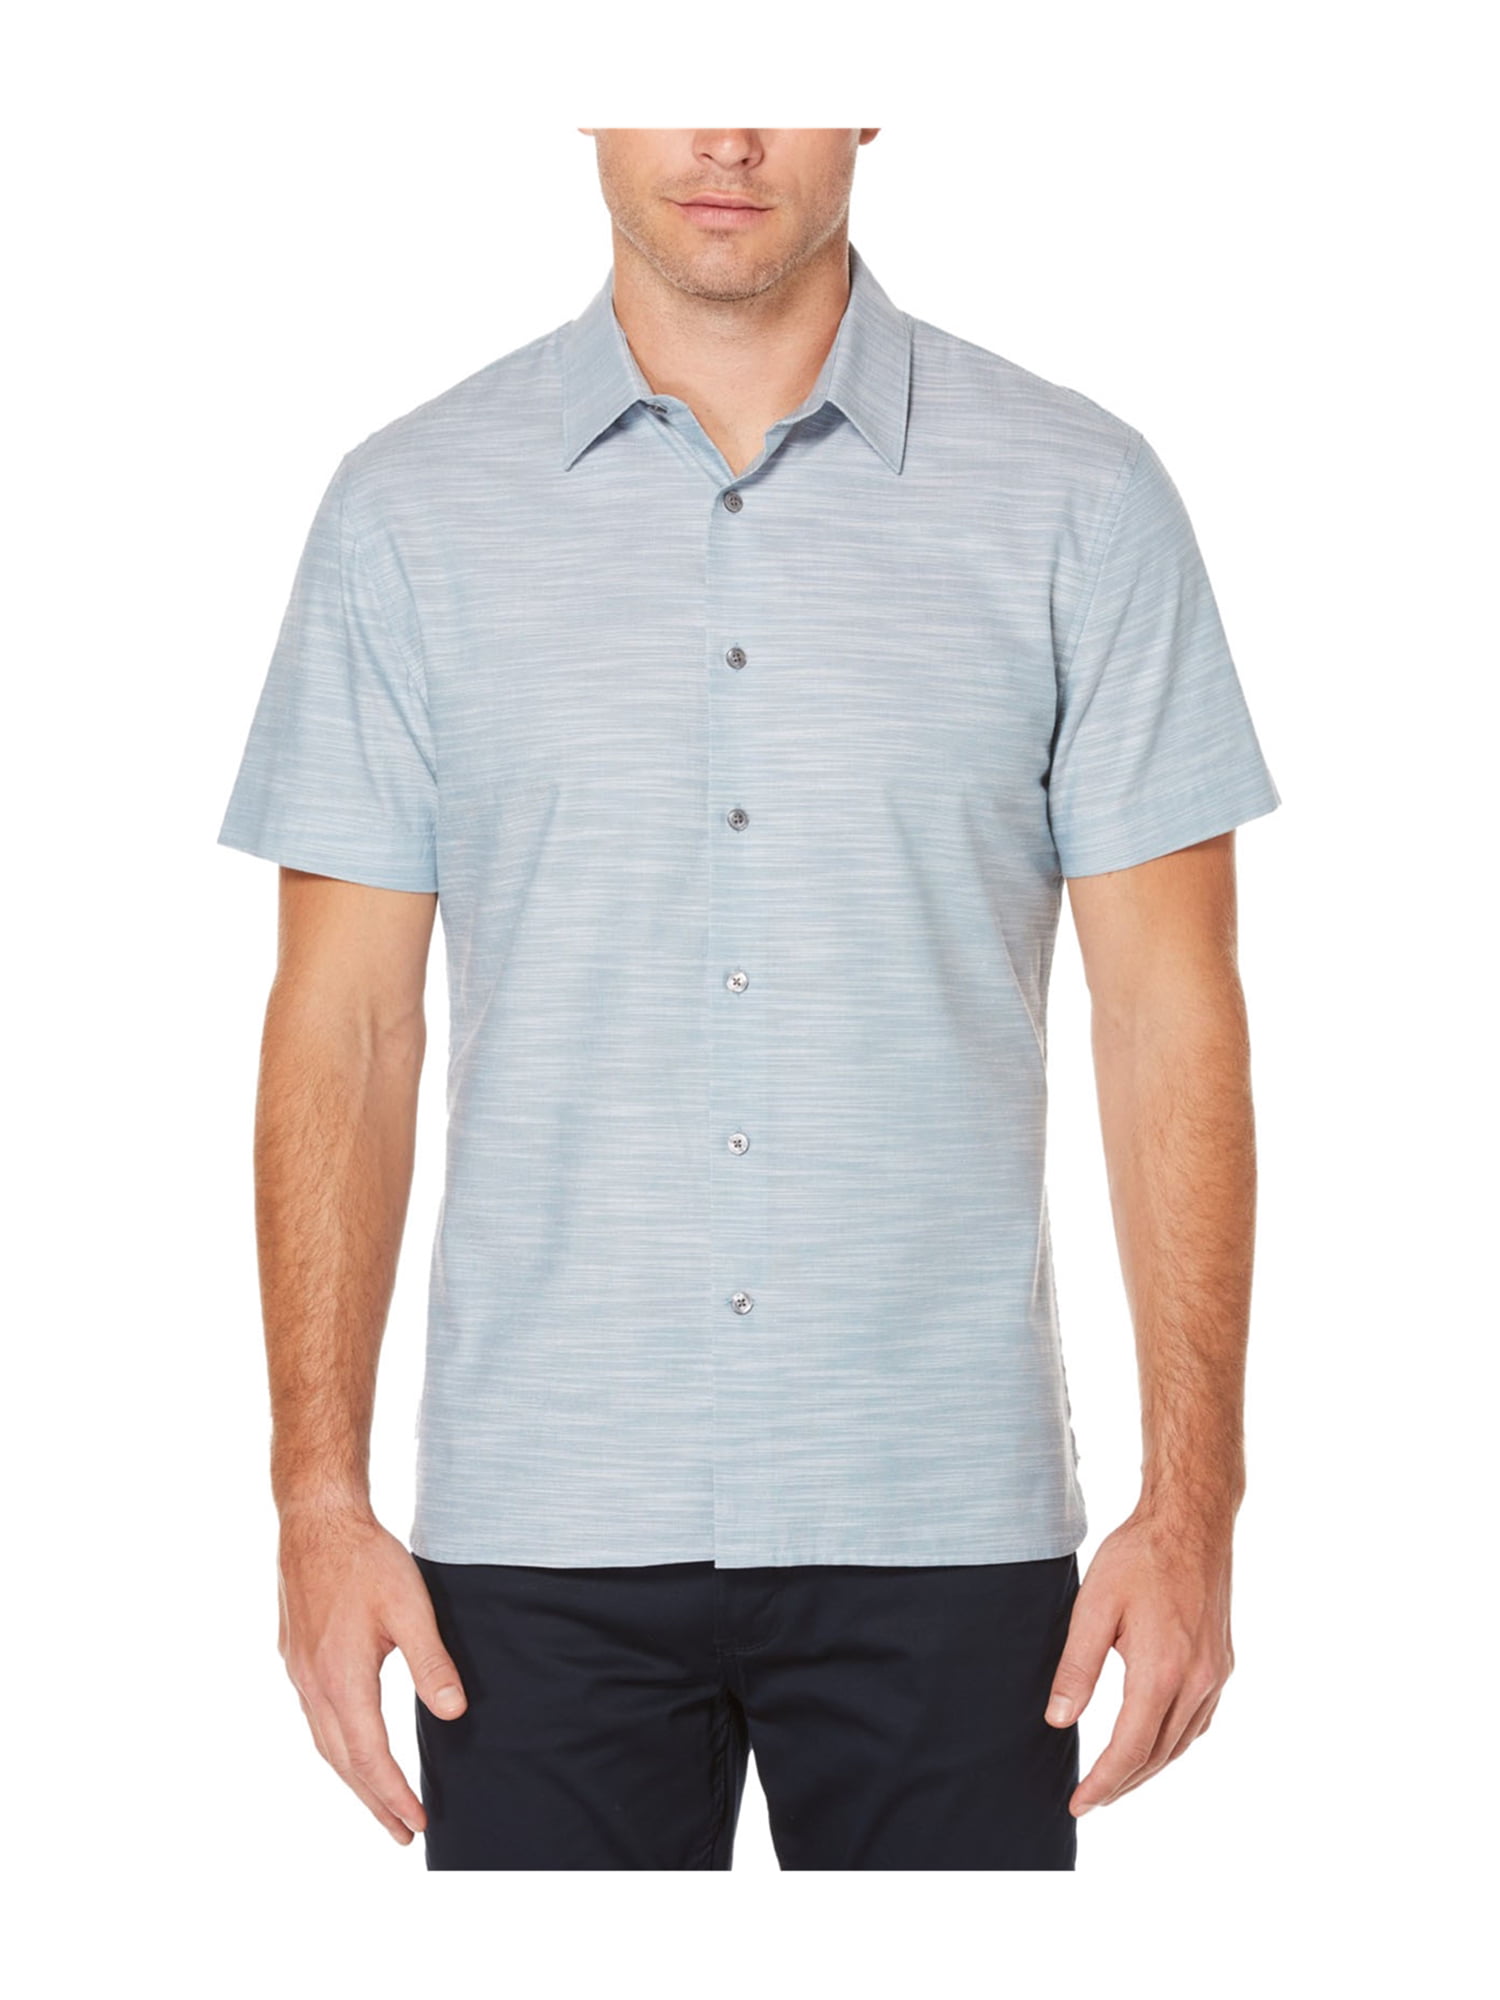 Perry Ellis - Perry Ellis Mens Textured Button Up Shirt - Walmart.com ...